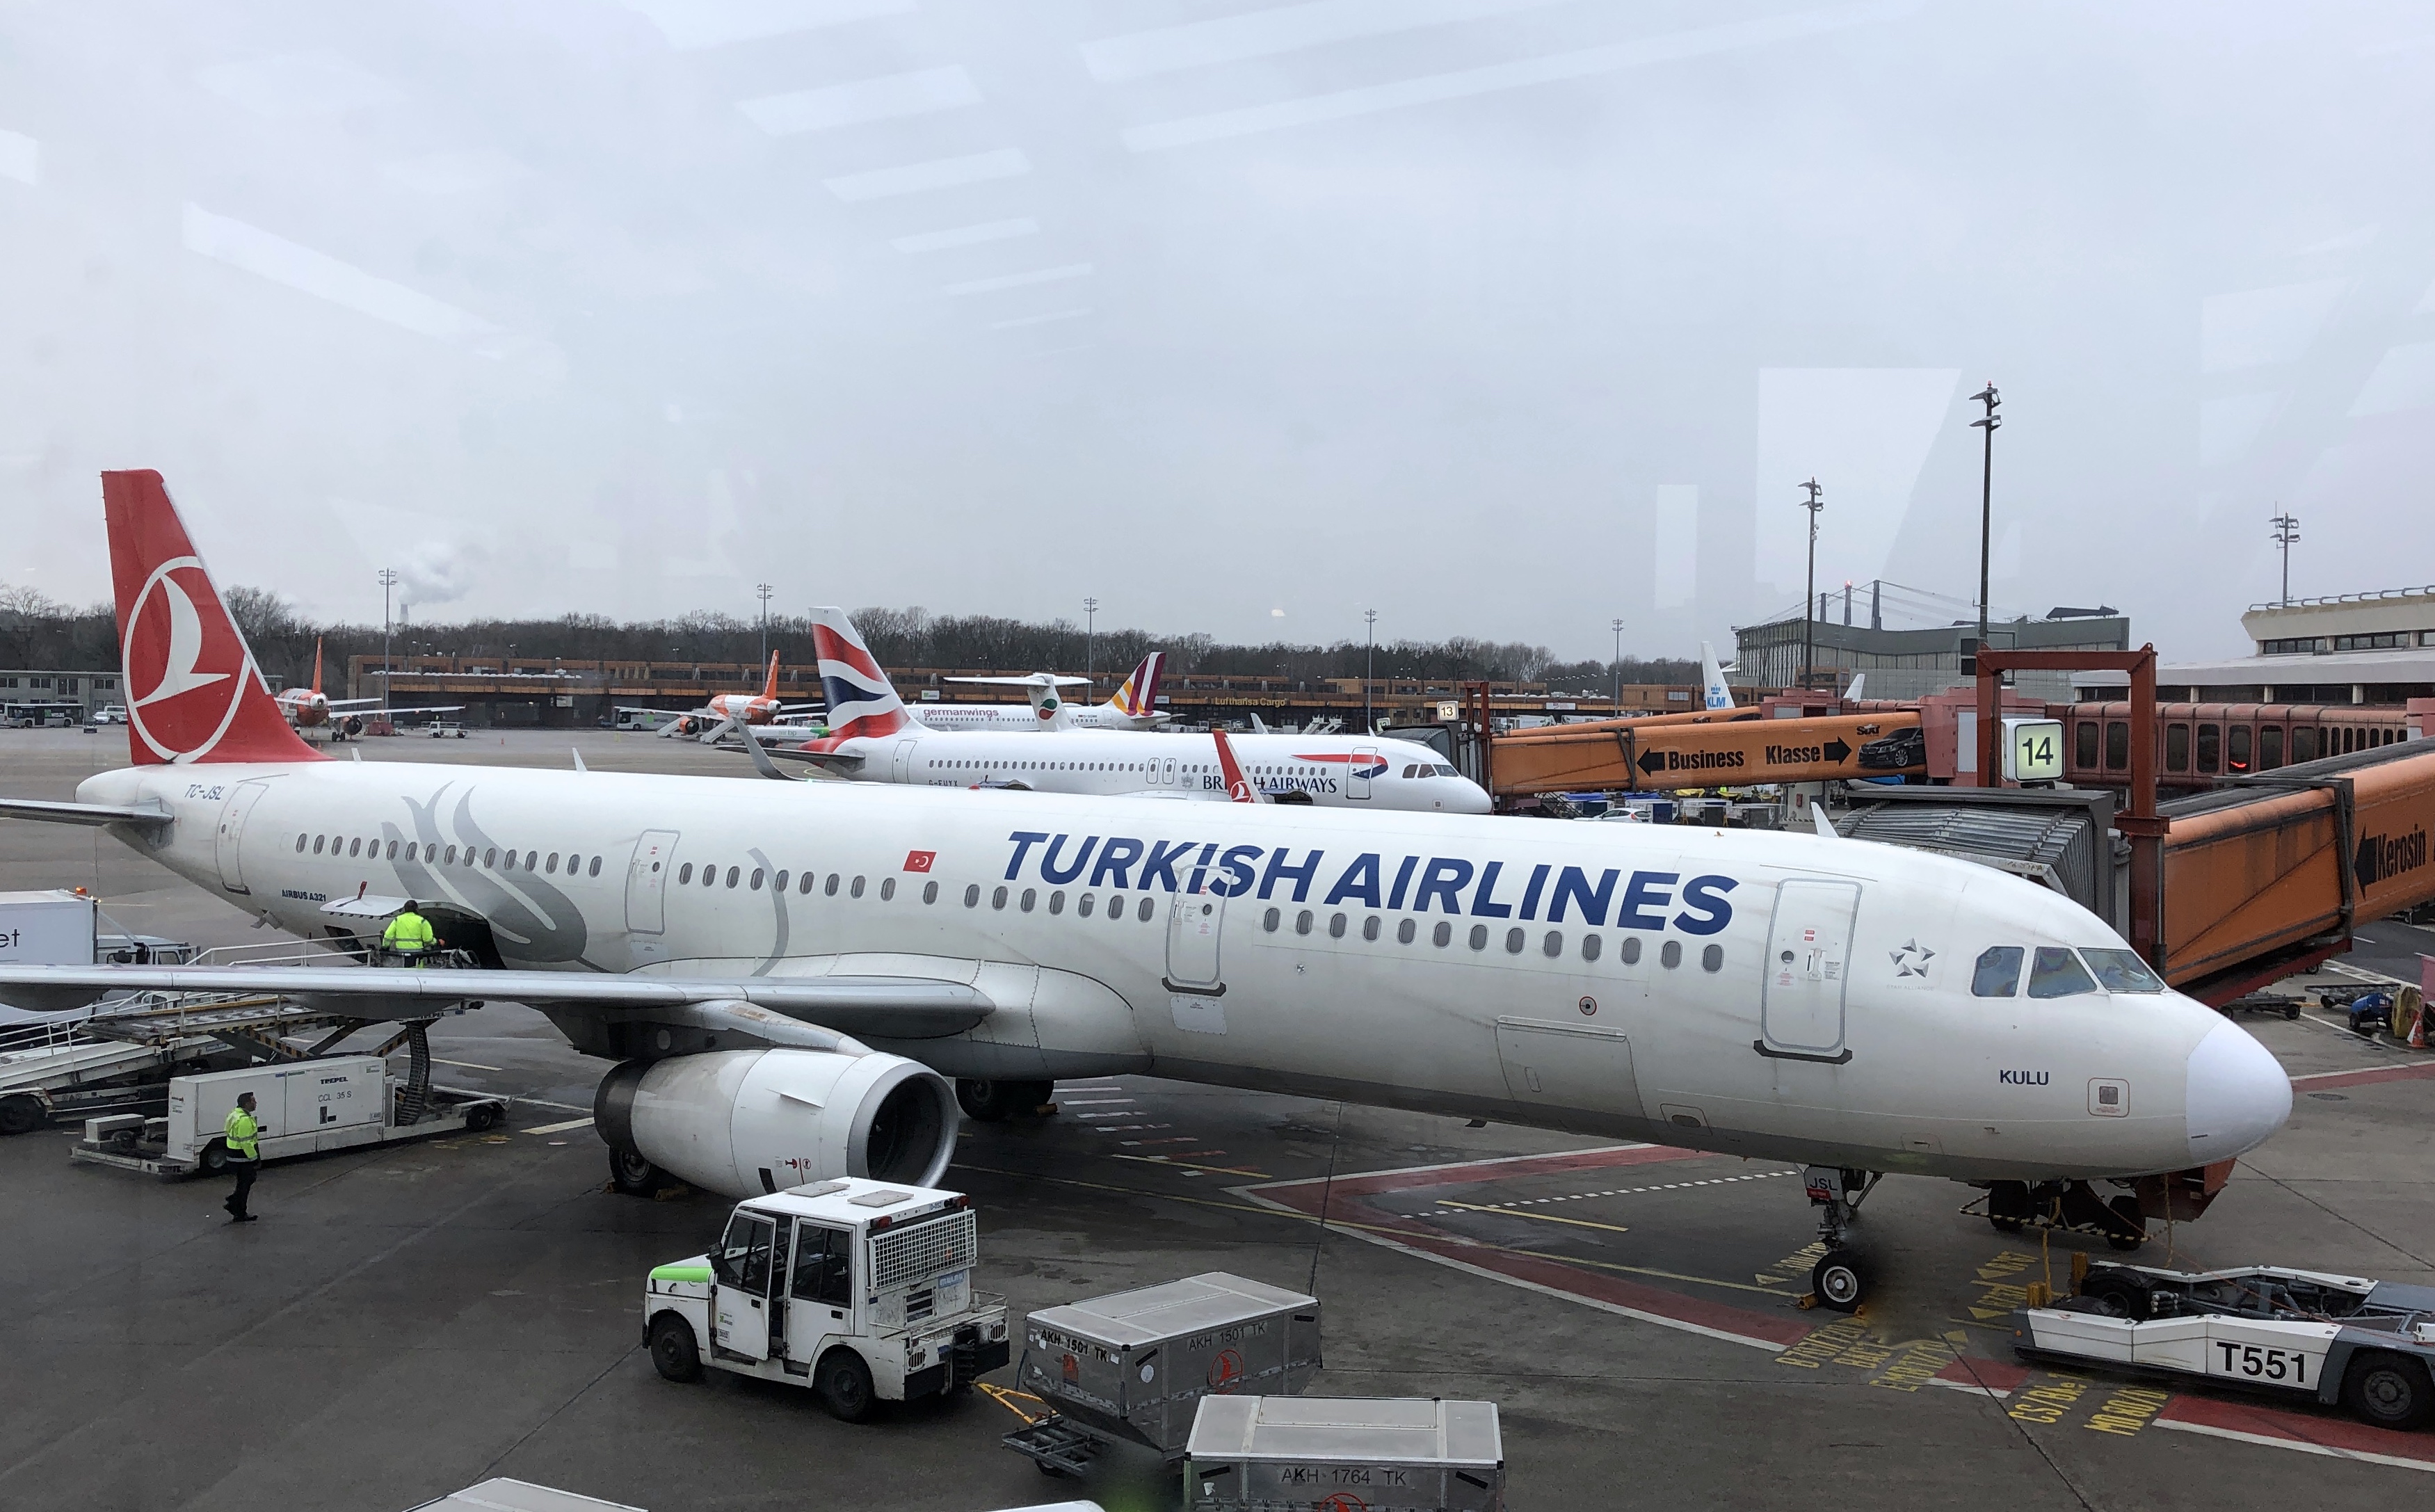 		Turkish Airlines Business Class nach Dubai ab 890€
	